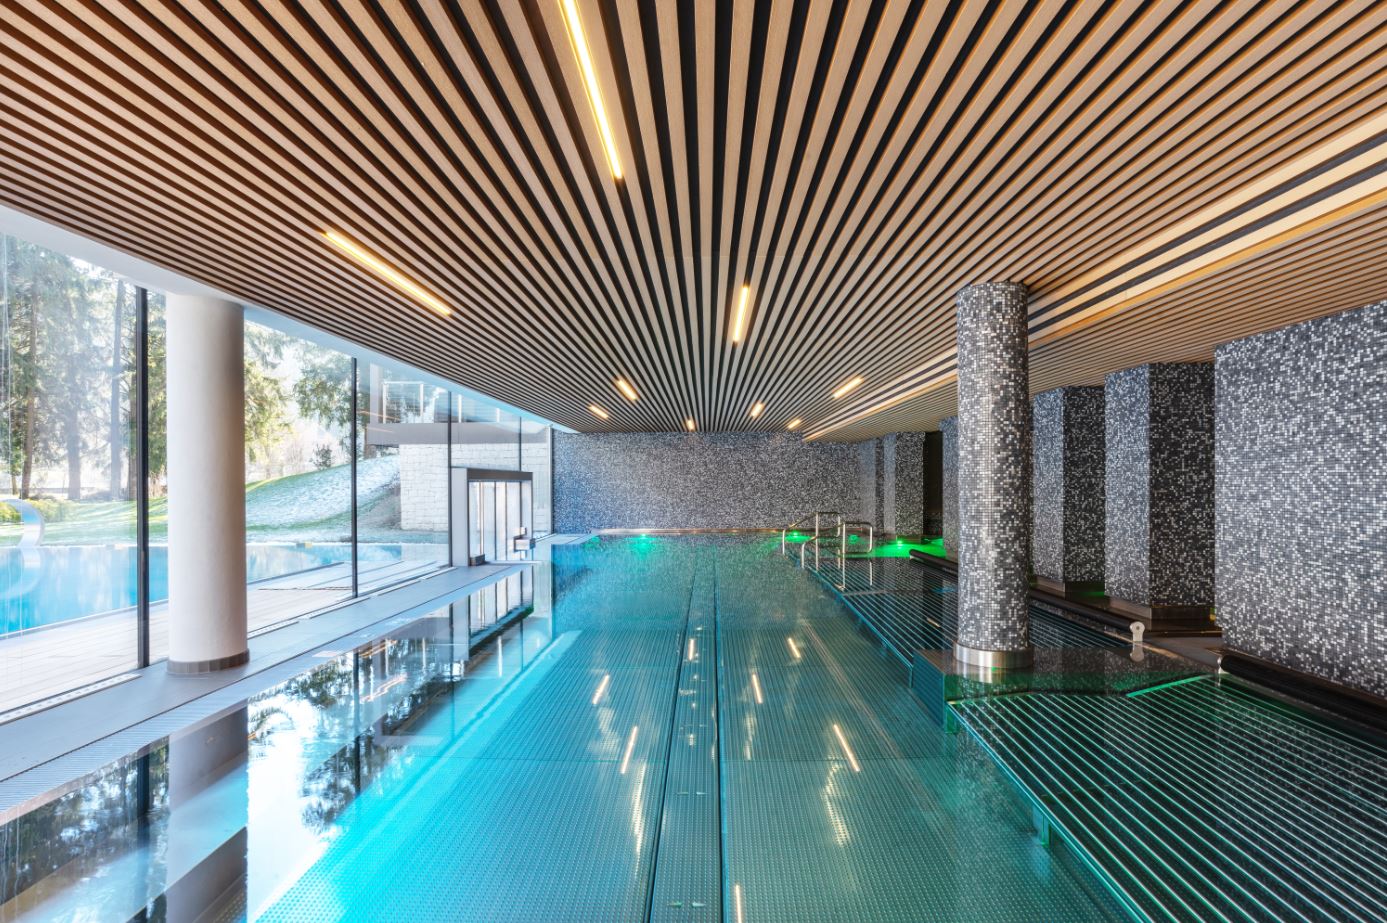 Pool design awards 2020 médaille d'or catégorie espace wellness